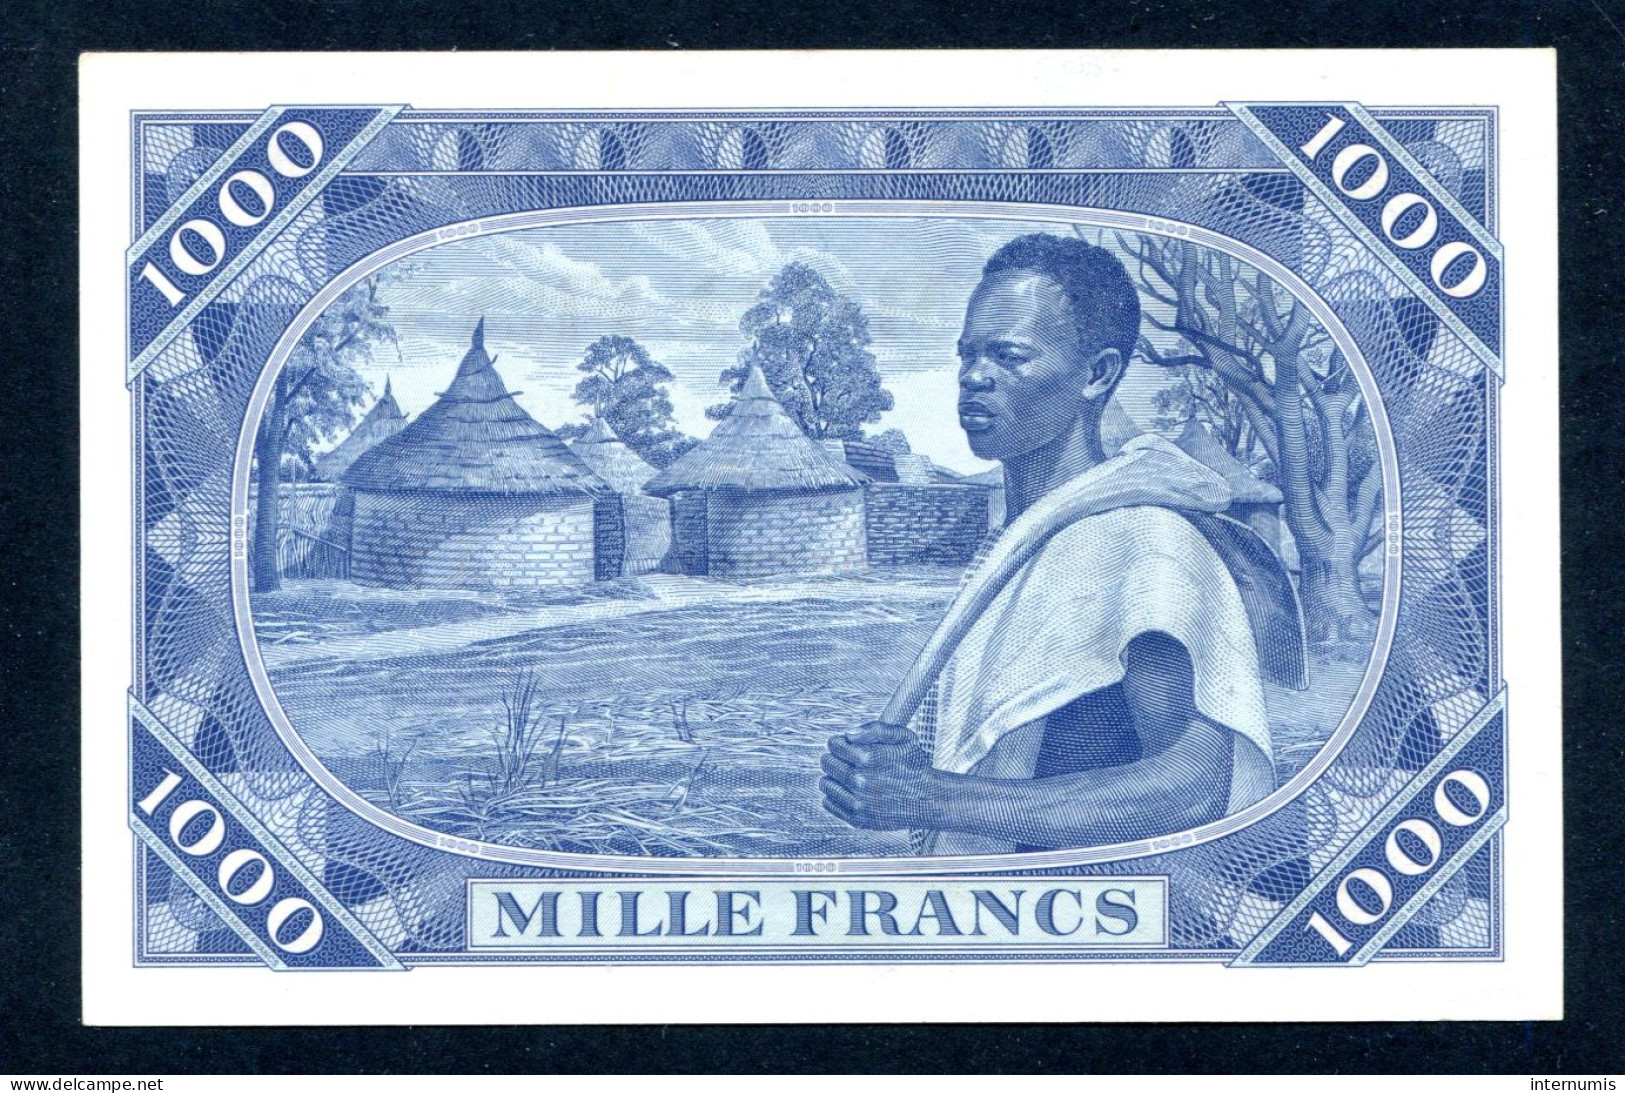 MALI, 1000 Francs, 22-09-1960, N° : A28-027289, Pr. Neuf (UNC), (Leclerc & Kolsky) K.398,B104a, P.04a - Mali